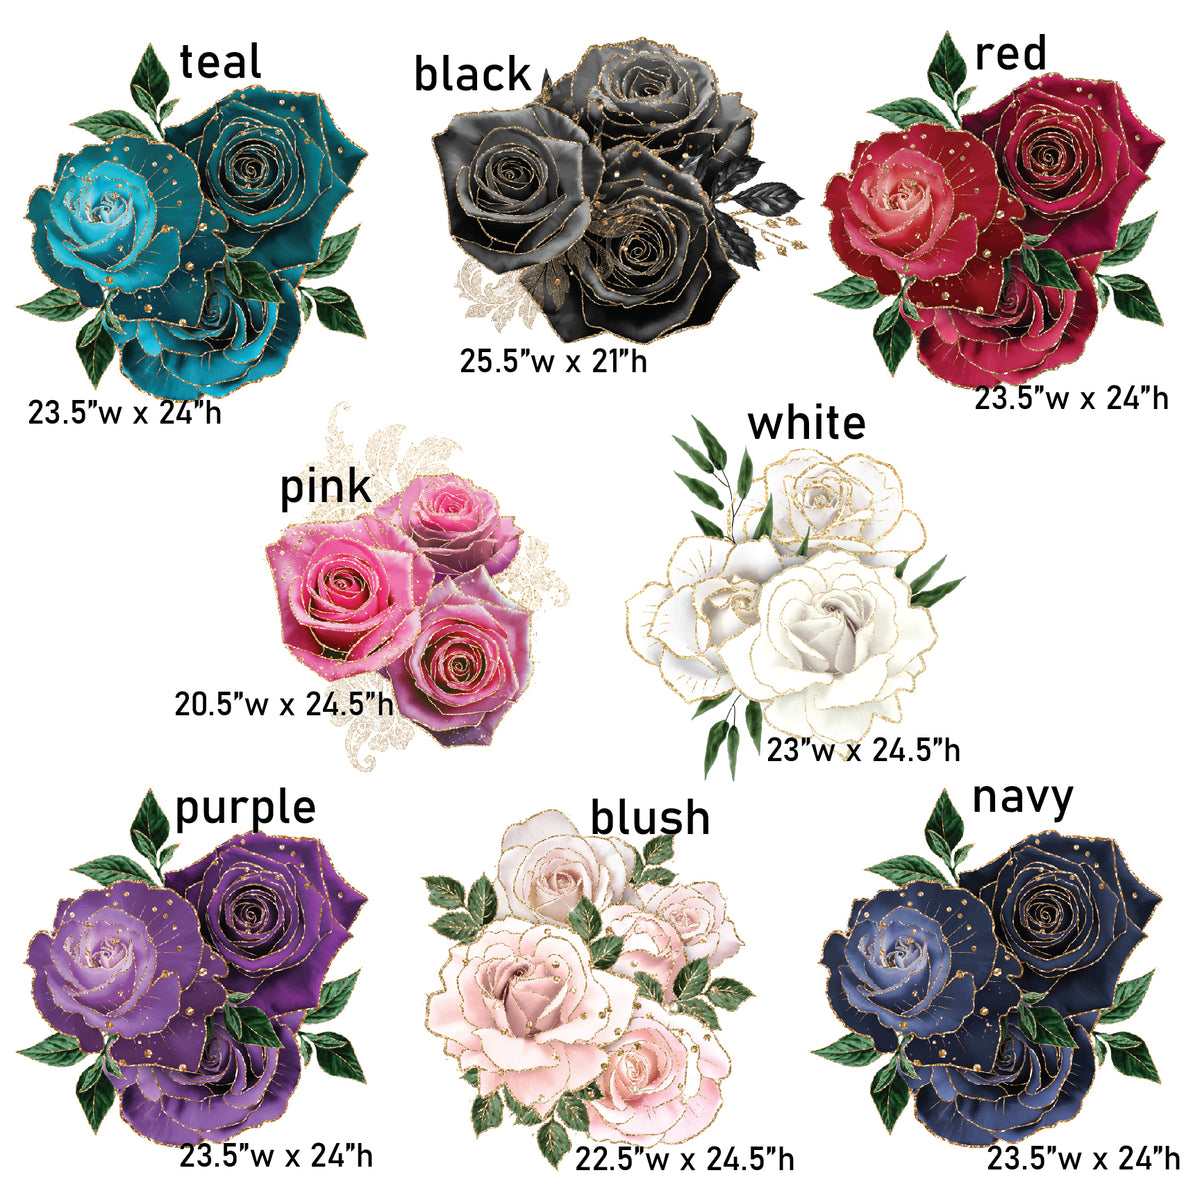 Extra Large Flower Bouquets set of 4 - 1 color choice per set